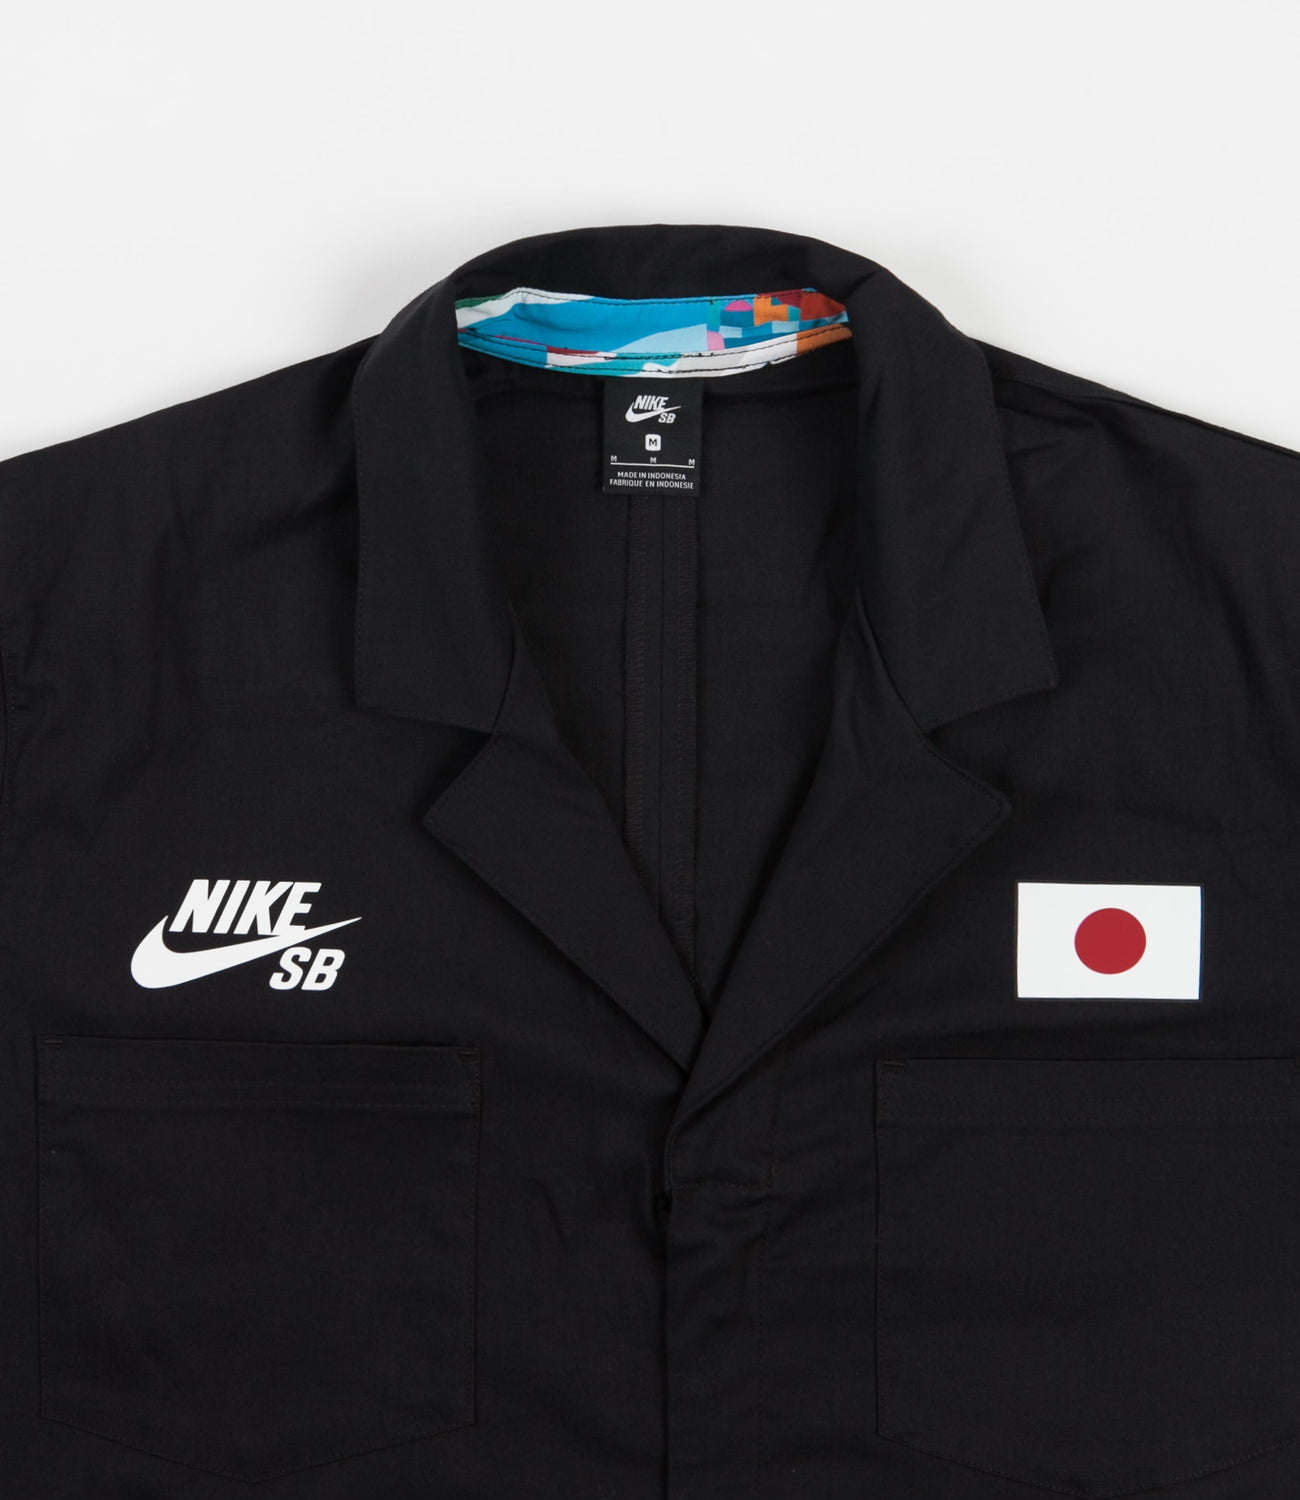 Luna Hacer bien Soberano Nike SB x Parra 'Japan Federation Kit' Coveralls - Black / White | Flatspot